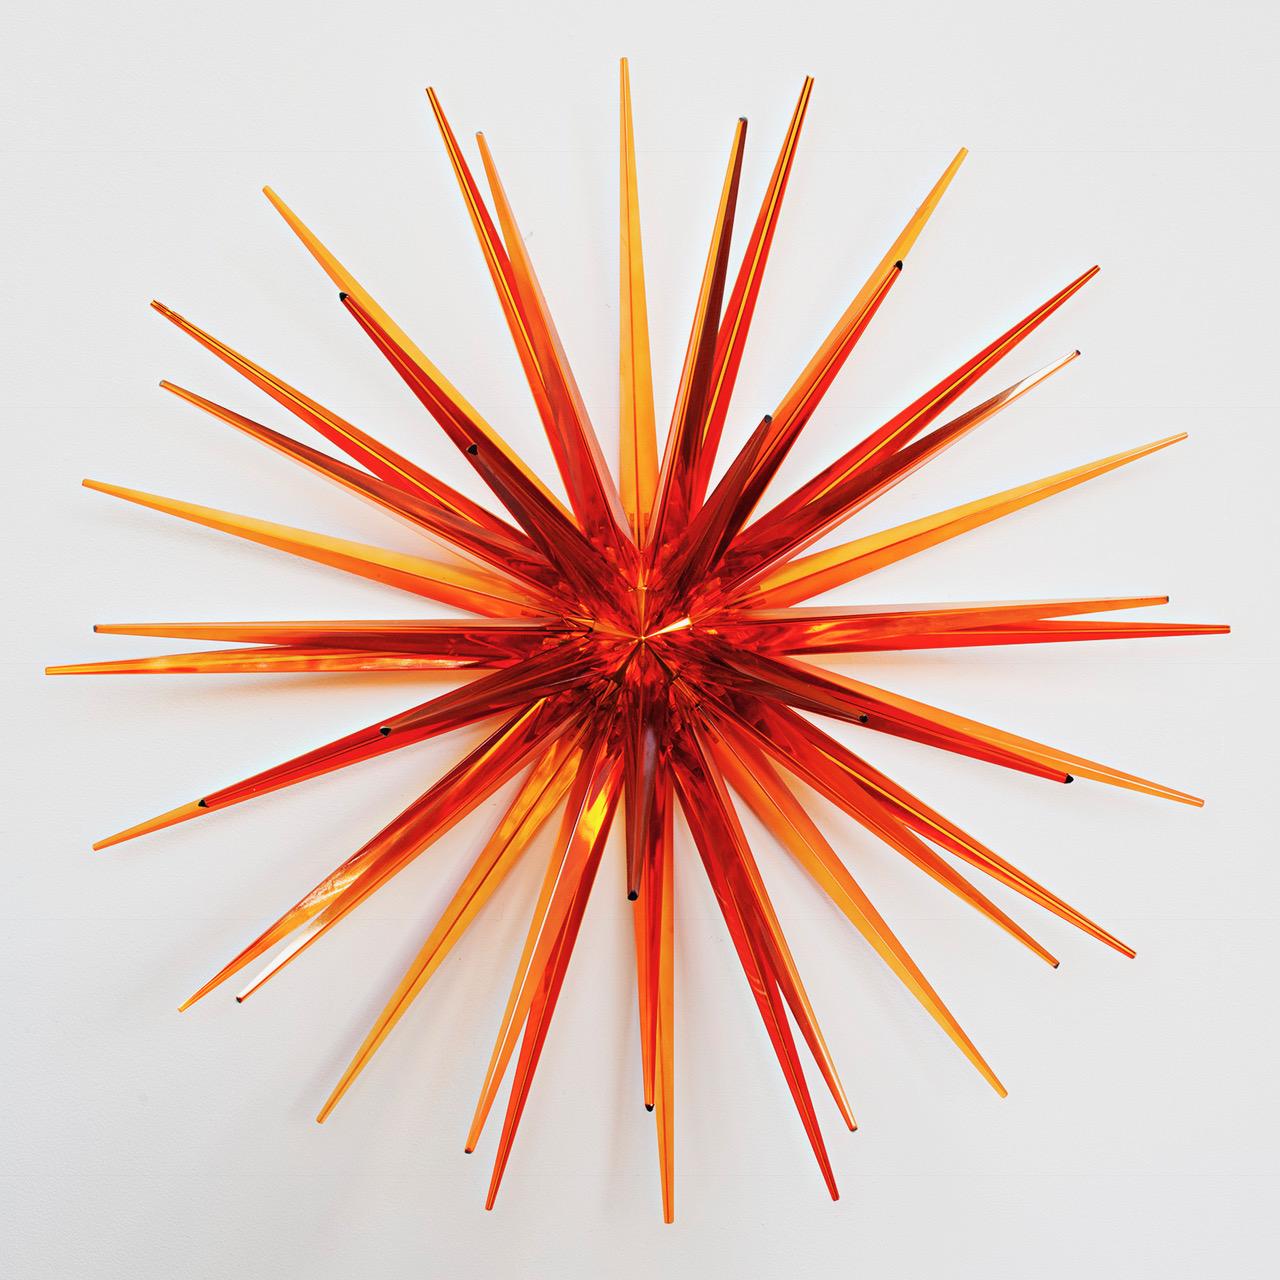 Norman Mooney Abstract Sculpture - "Orange Star" Cast Glass Wall Relief Sculpture, Orange, Abstract